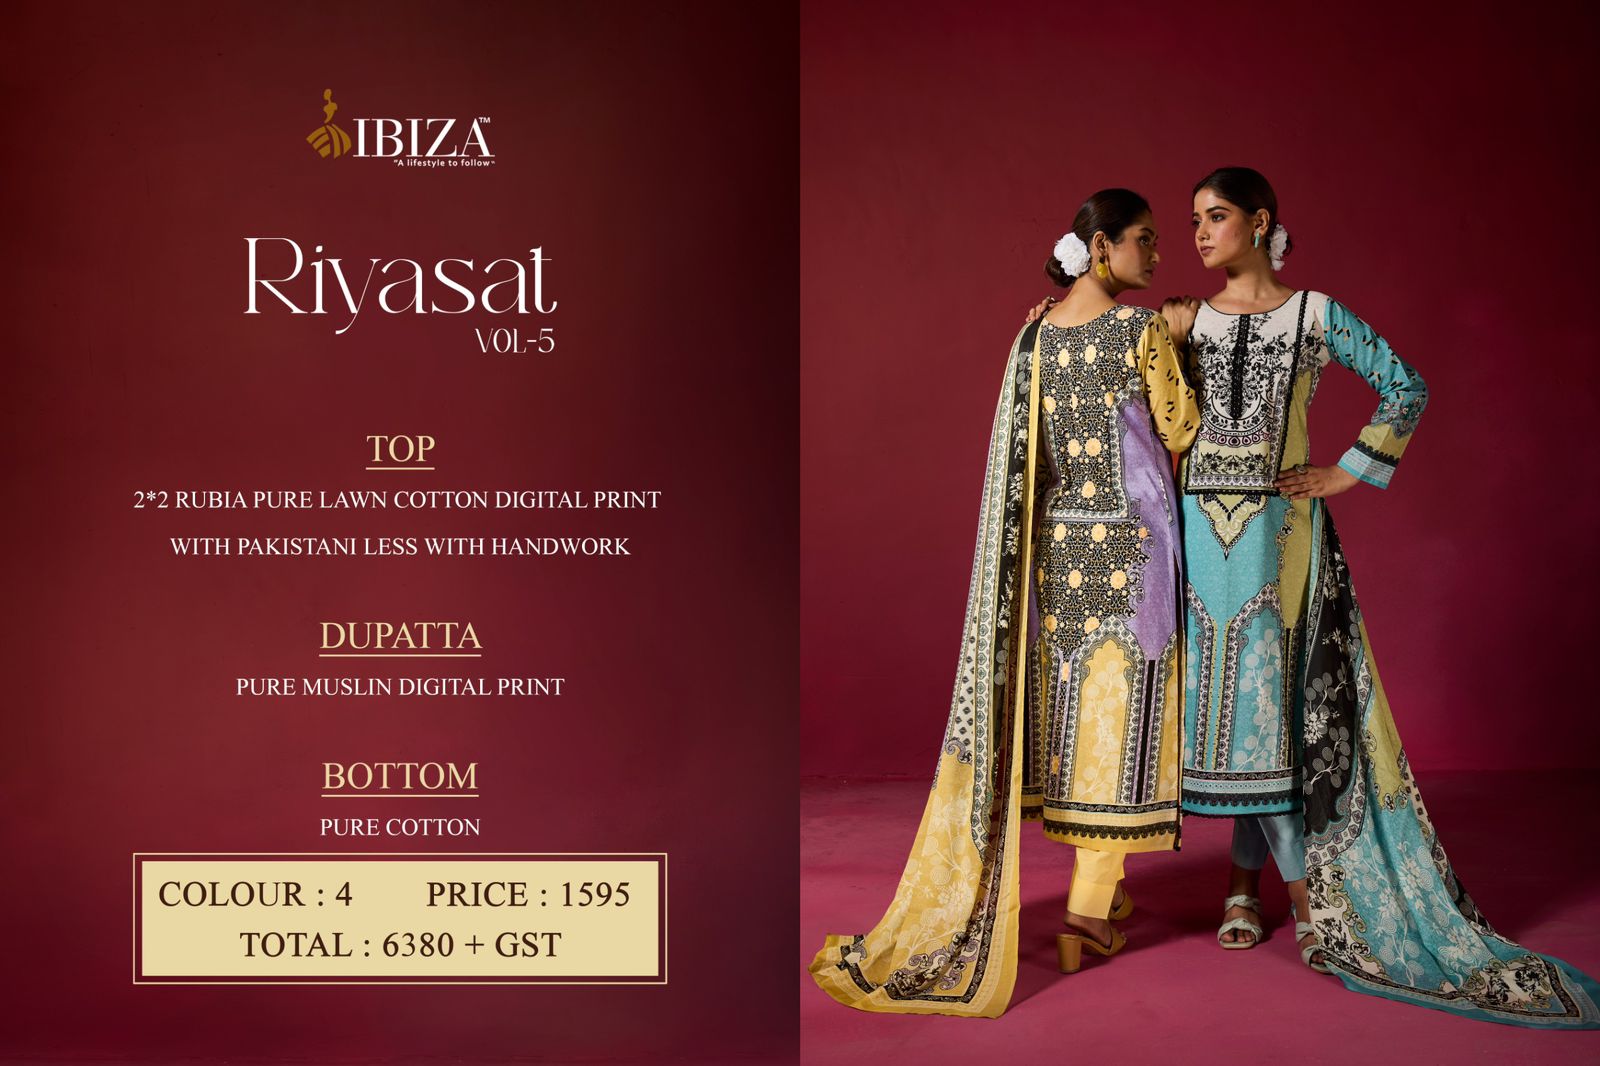 Riyasat Vol 5 Ibiza Lawn Cotton Pant Style Suits Wholesaler India